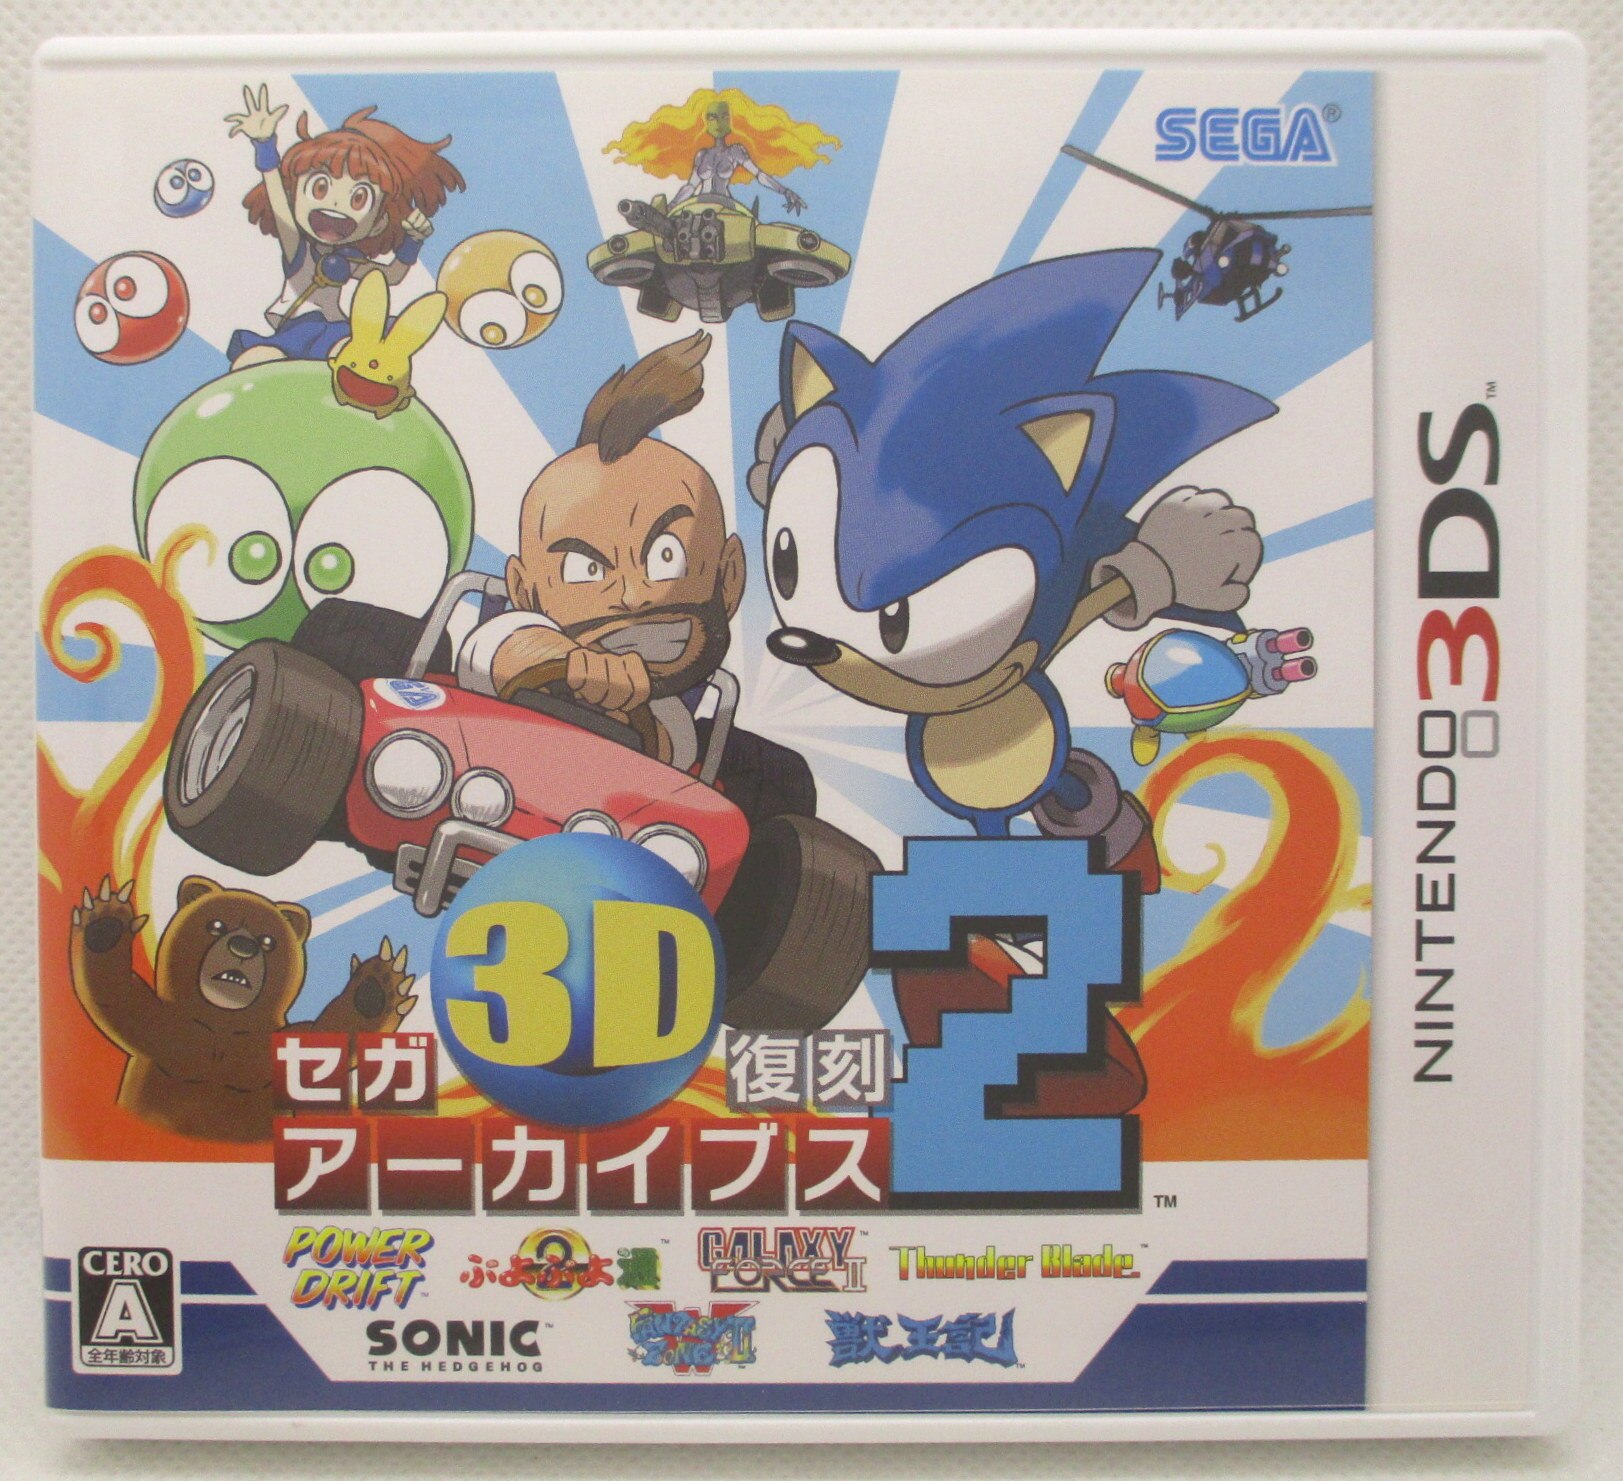 3DS セガ3D復刻アーカイブス2 | Mandarake Online Shop